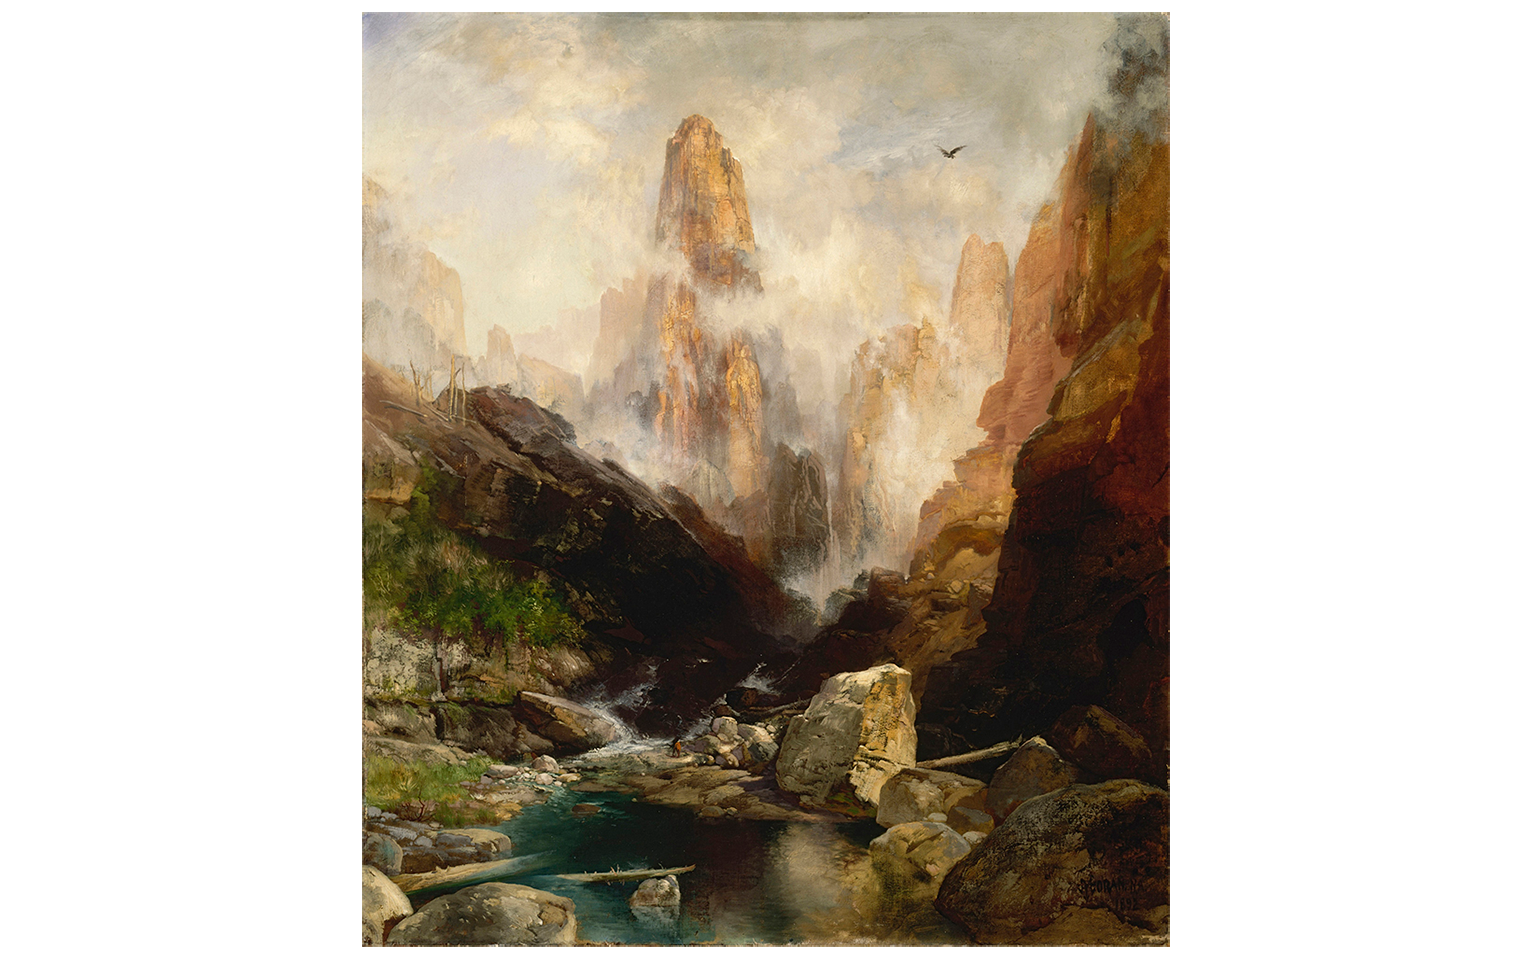 Thomas Moran's Mist in Kanab Canyon, Utah (1892)